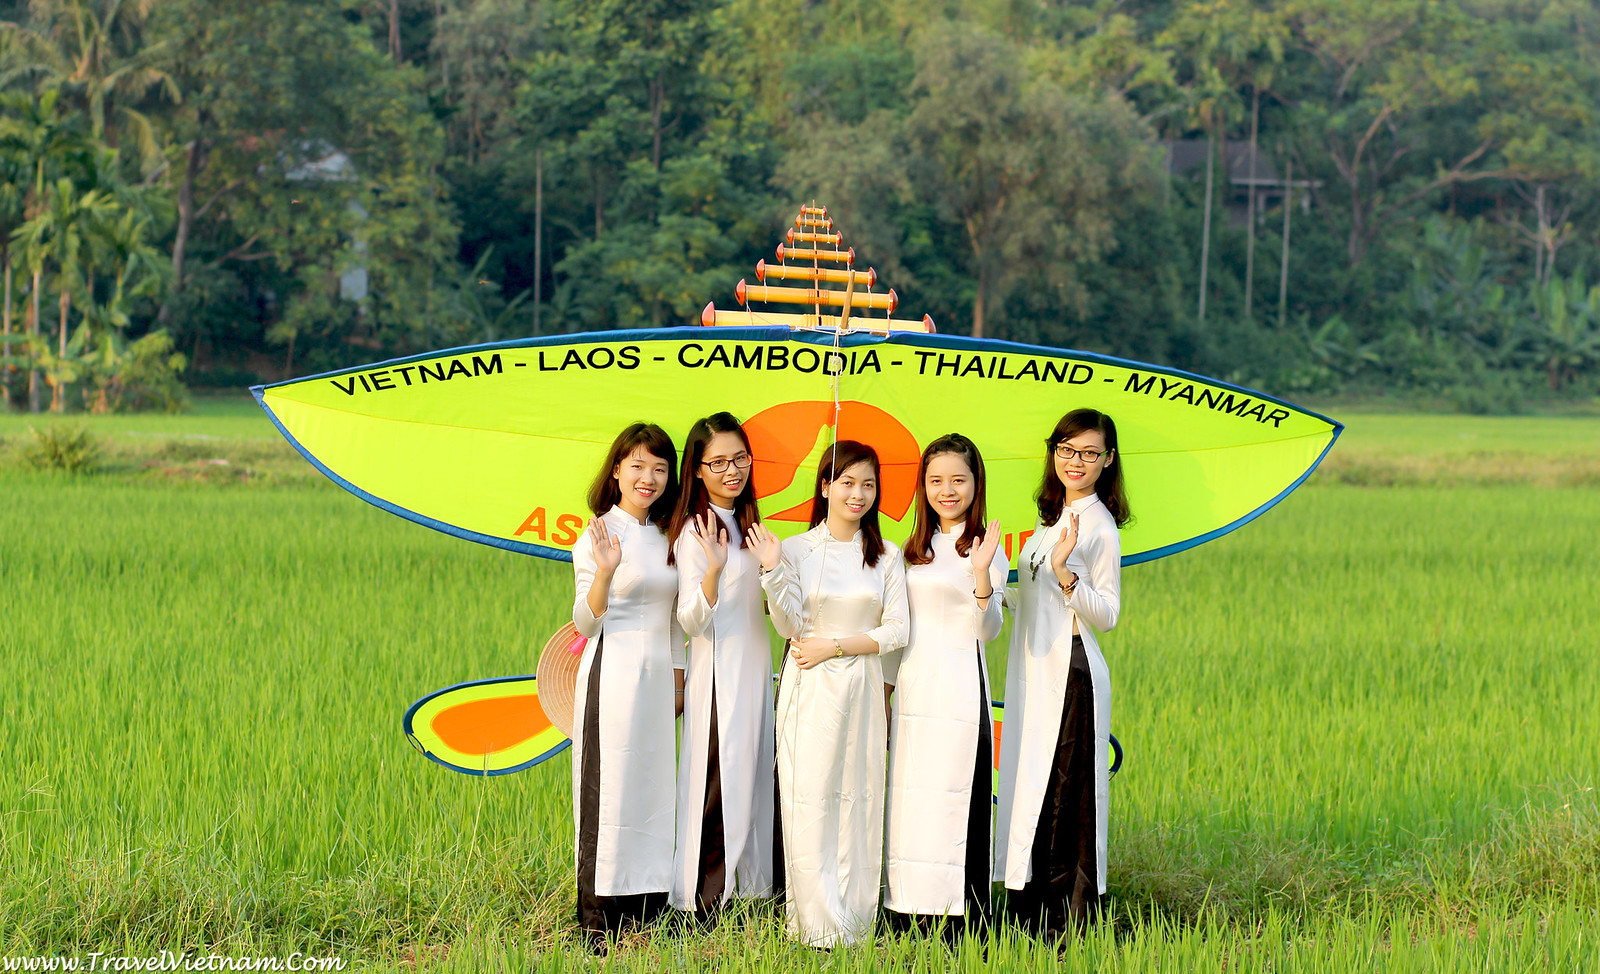 Vietnamese traditional flute kite or Dieu Sao